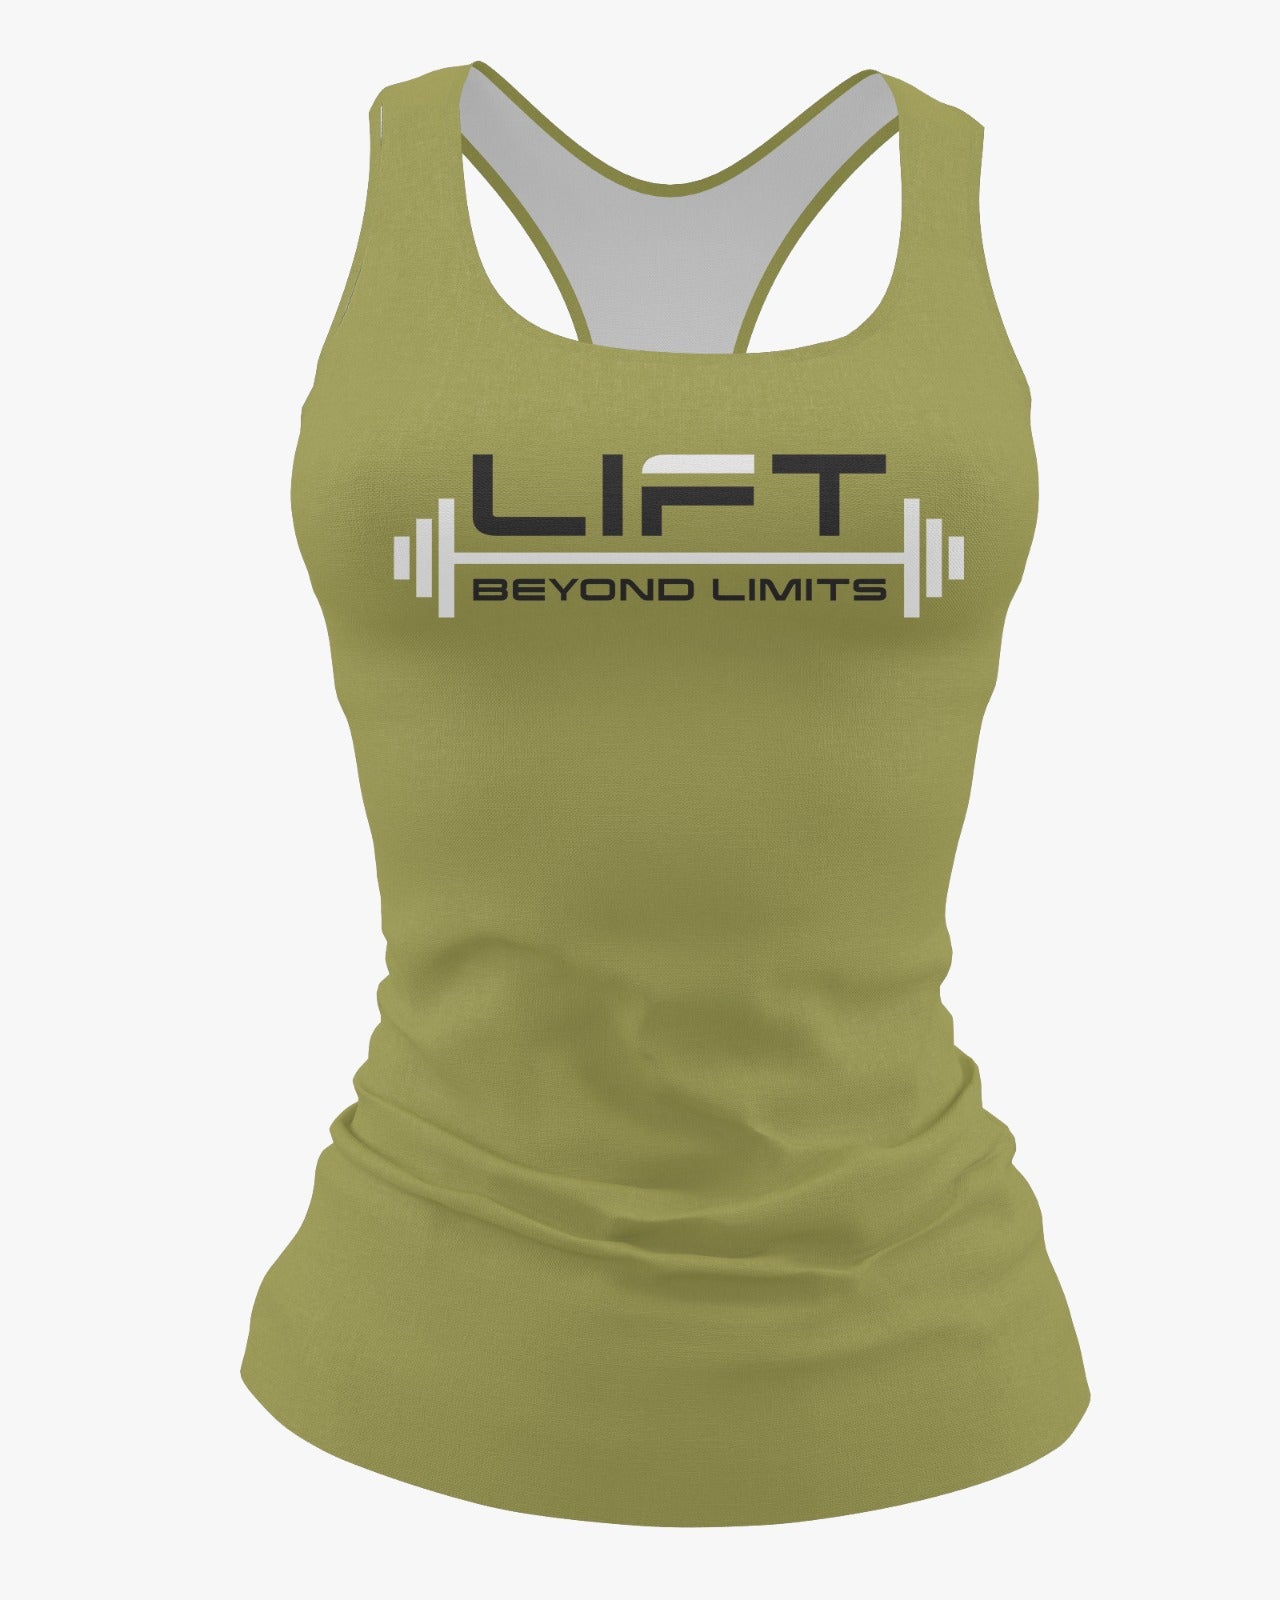 Lift Beyond Limits Performance Dri Tech Shirt ~ Solid Vegas Gold